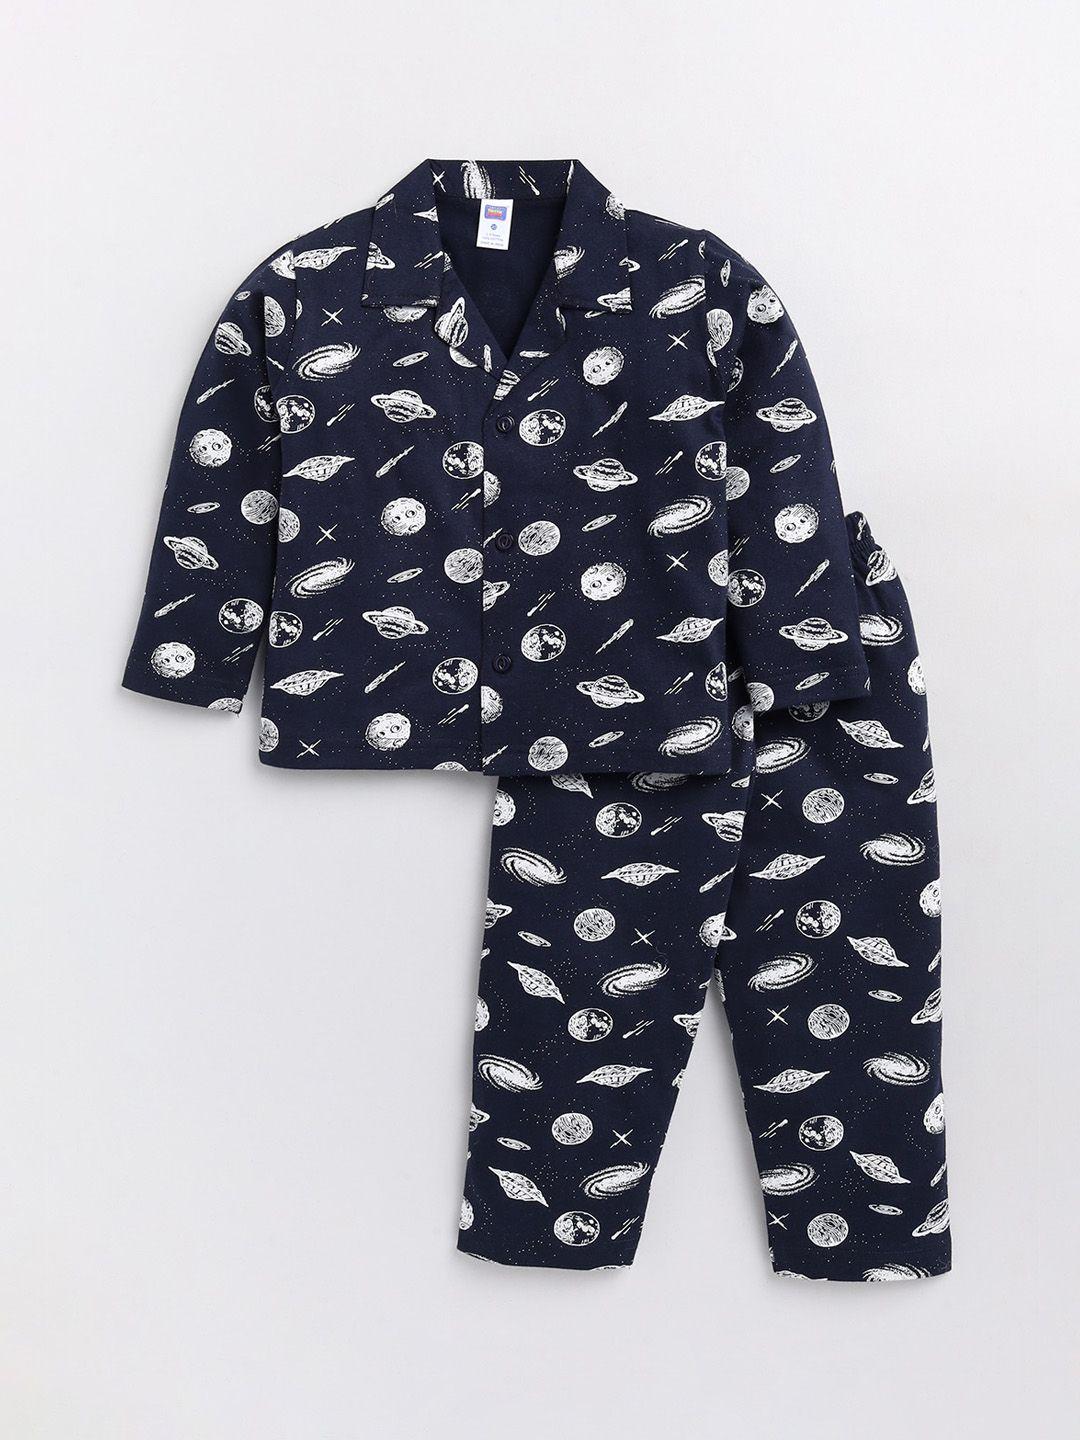 nottie-planet-unisex-kids-navy-blue-&-white-printed-night-suit